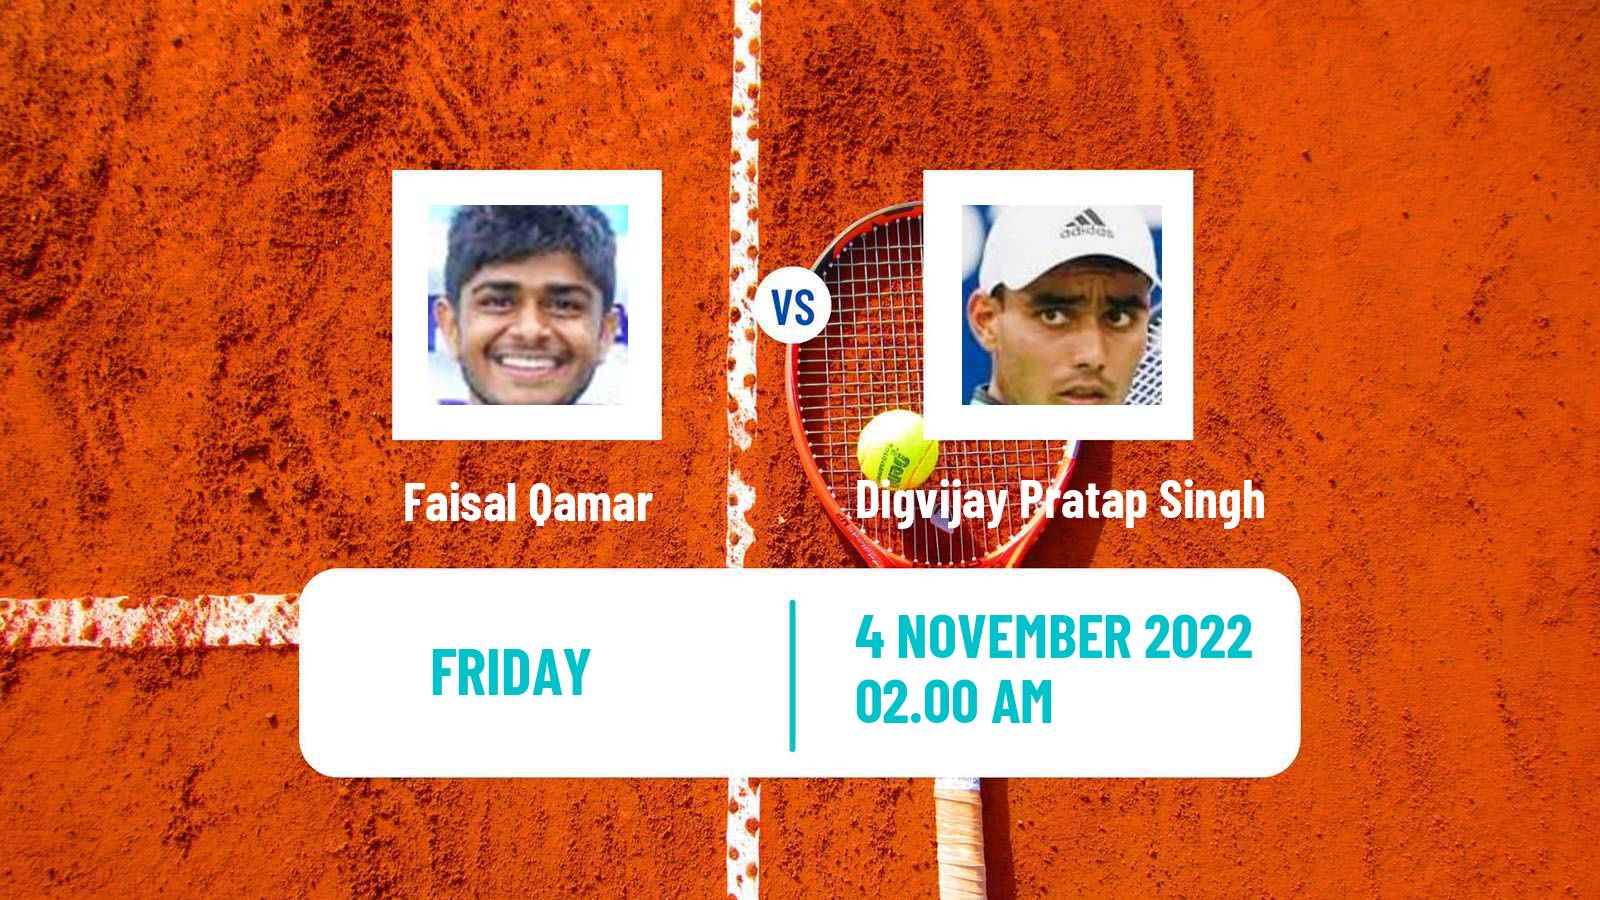 Tennis ITF Tournaments Faisal Qamar - Digvijay Pratap Singh